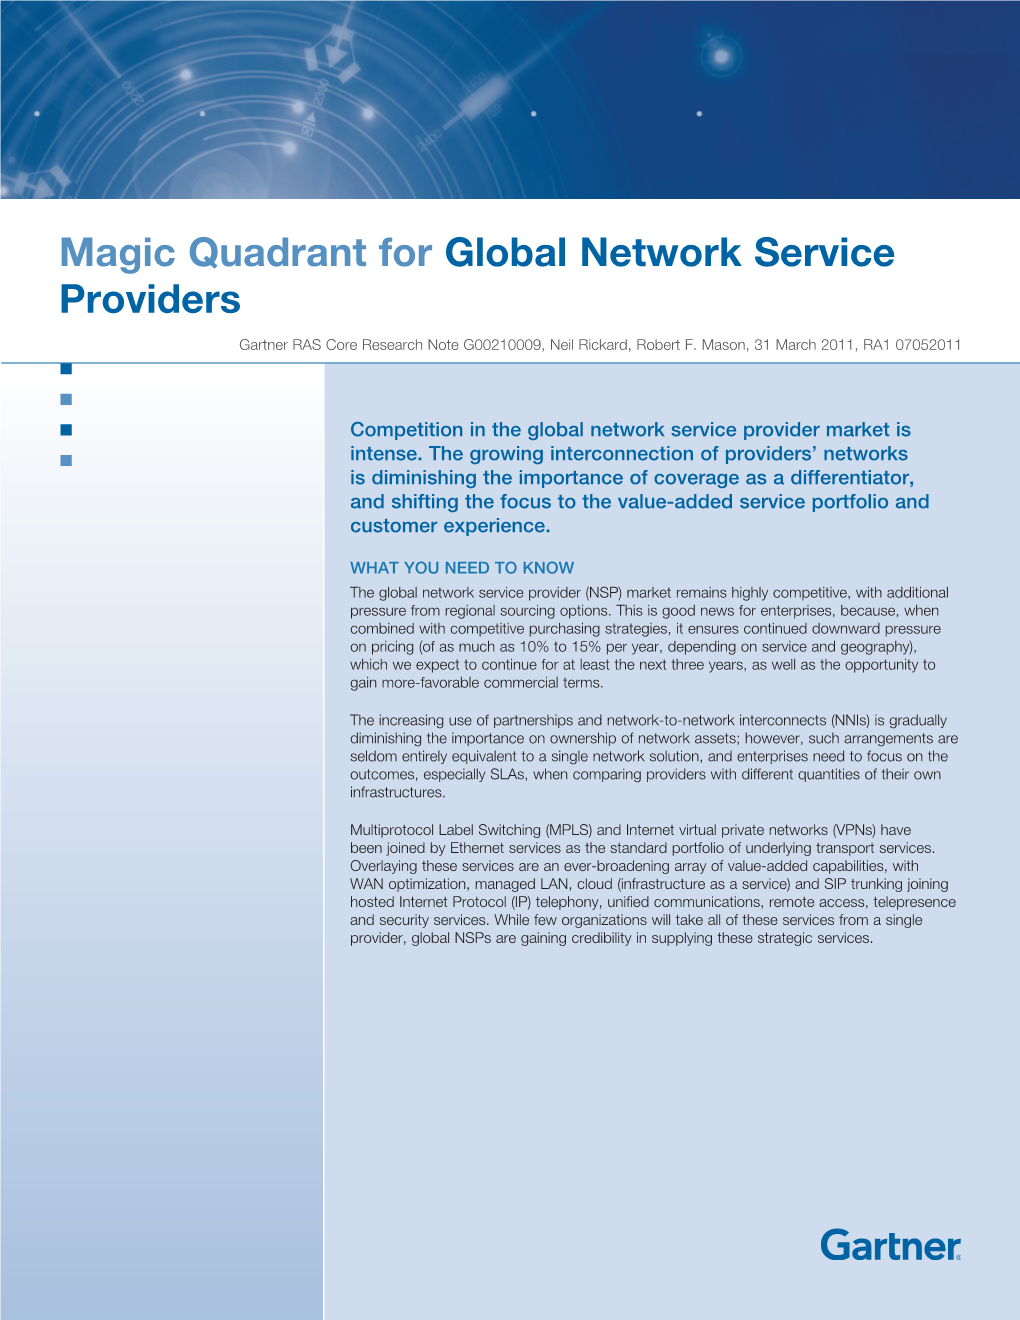 Magic Quadrant for Global Network Service Providers